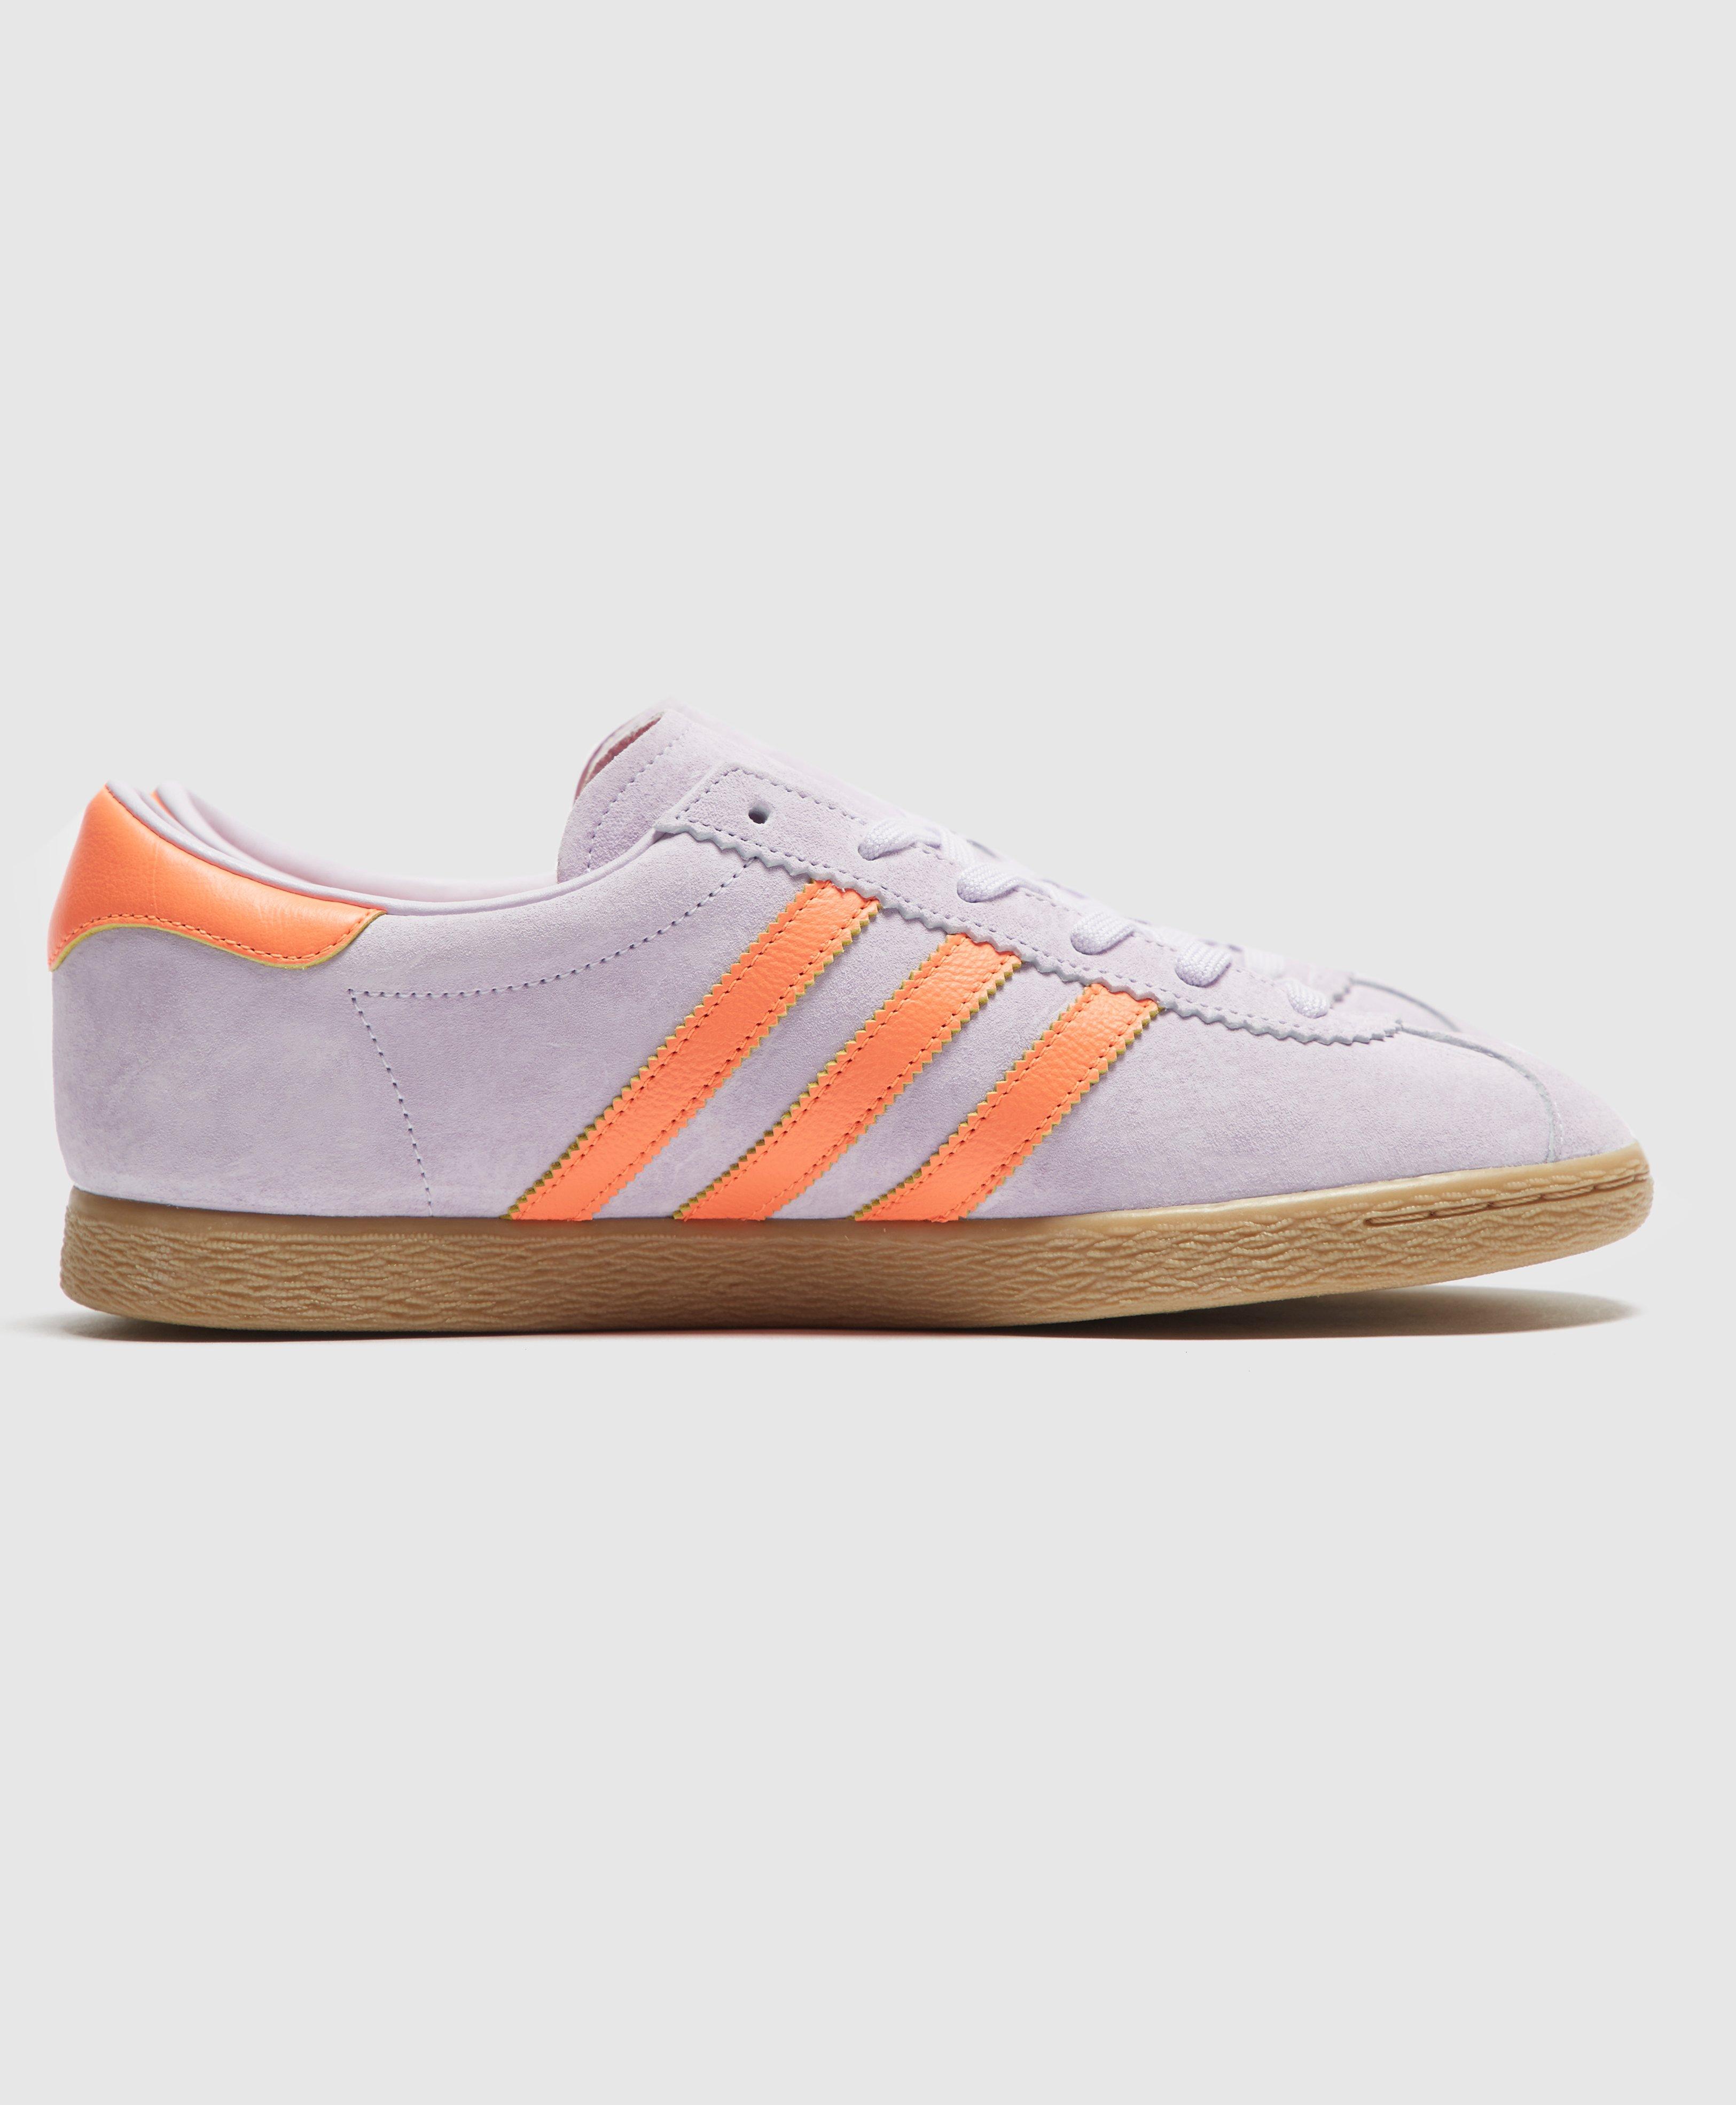 adidas originals stadt trainers in lilac and orange